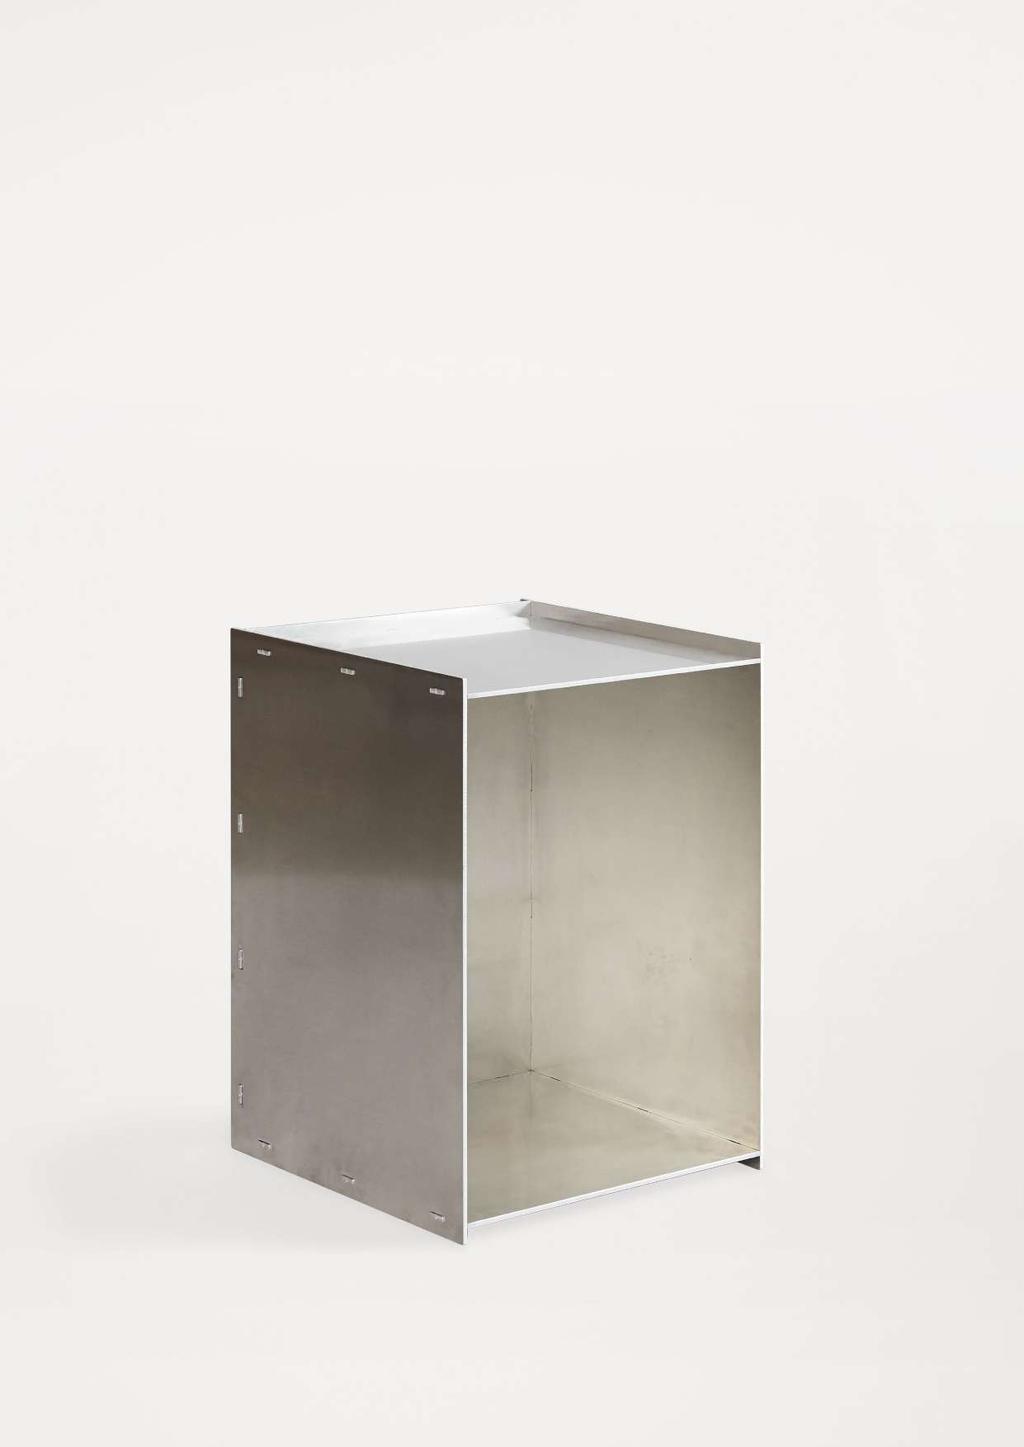 328 338 418 RIVET BOX Design Jonas Trampedach Year 2014 Typology Furniture Collection